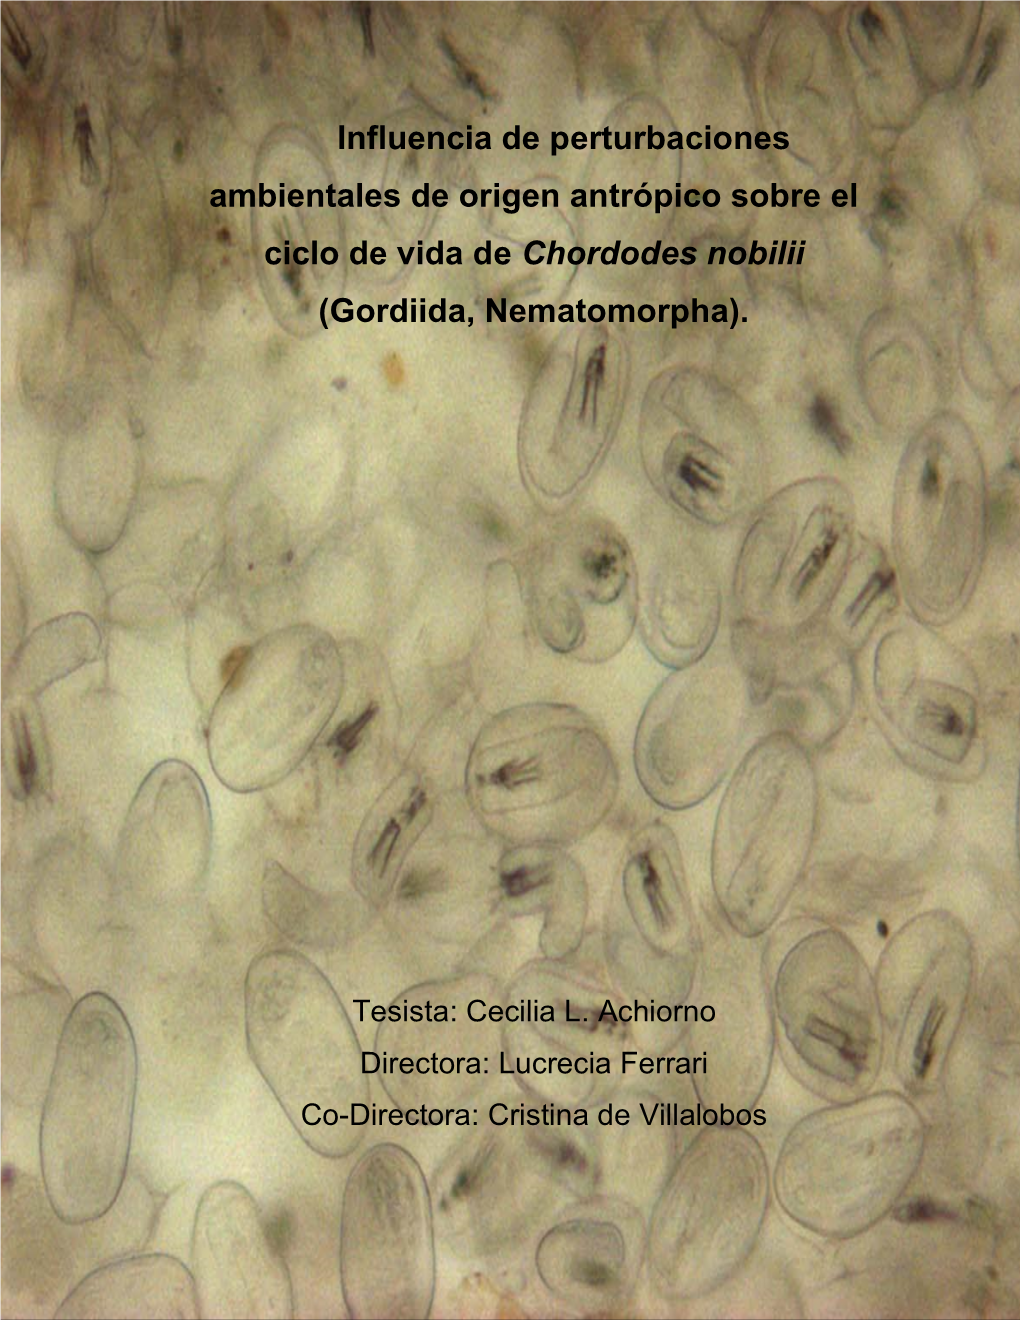 Gordiida, Nematomorpha